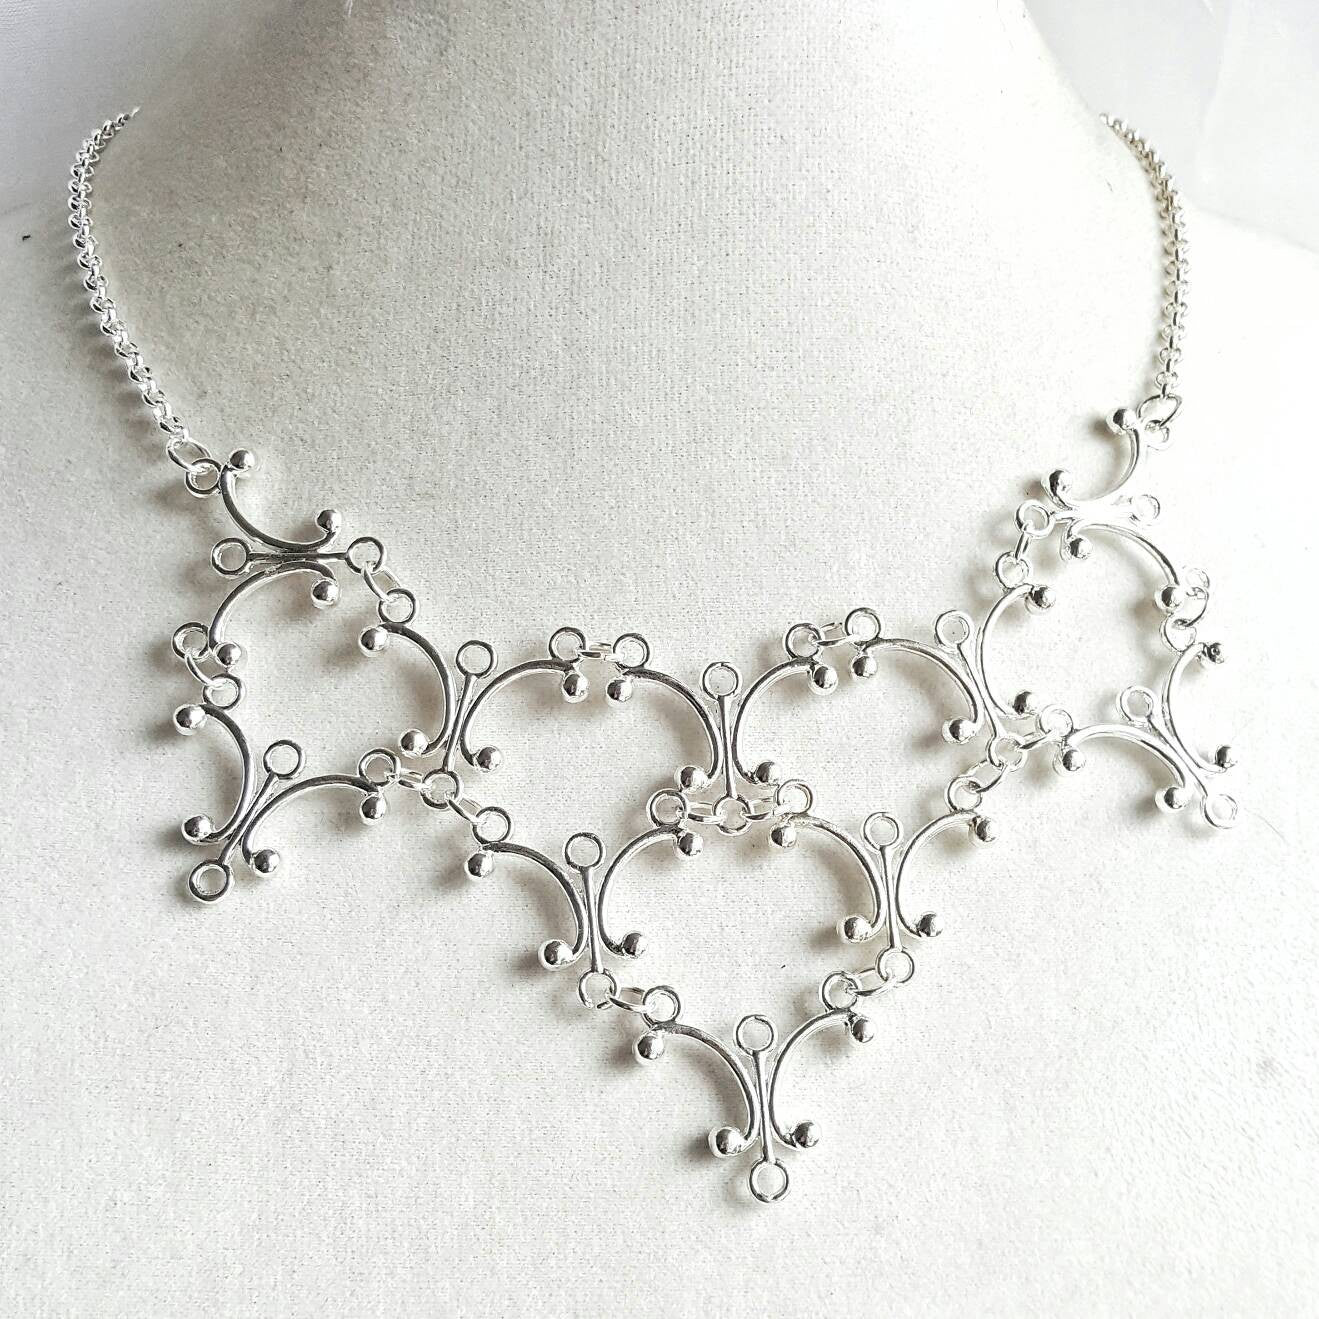 Silver Gothic Necklace - Neo Victorian Goth Jewelry - Ren Faire